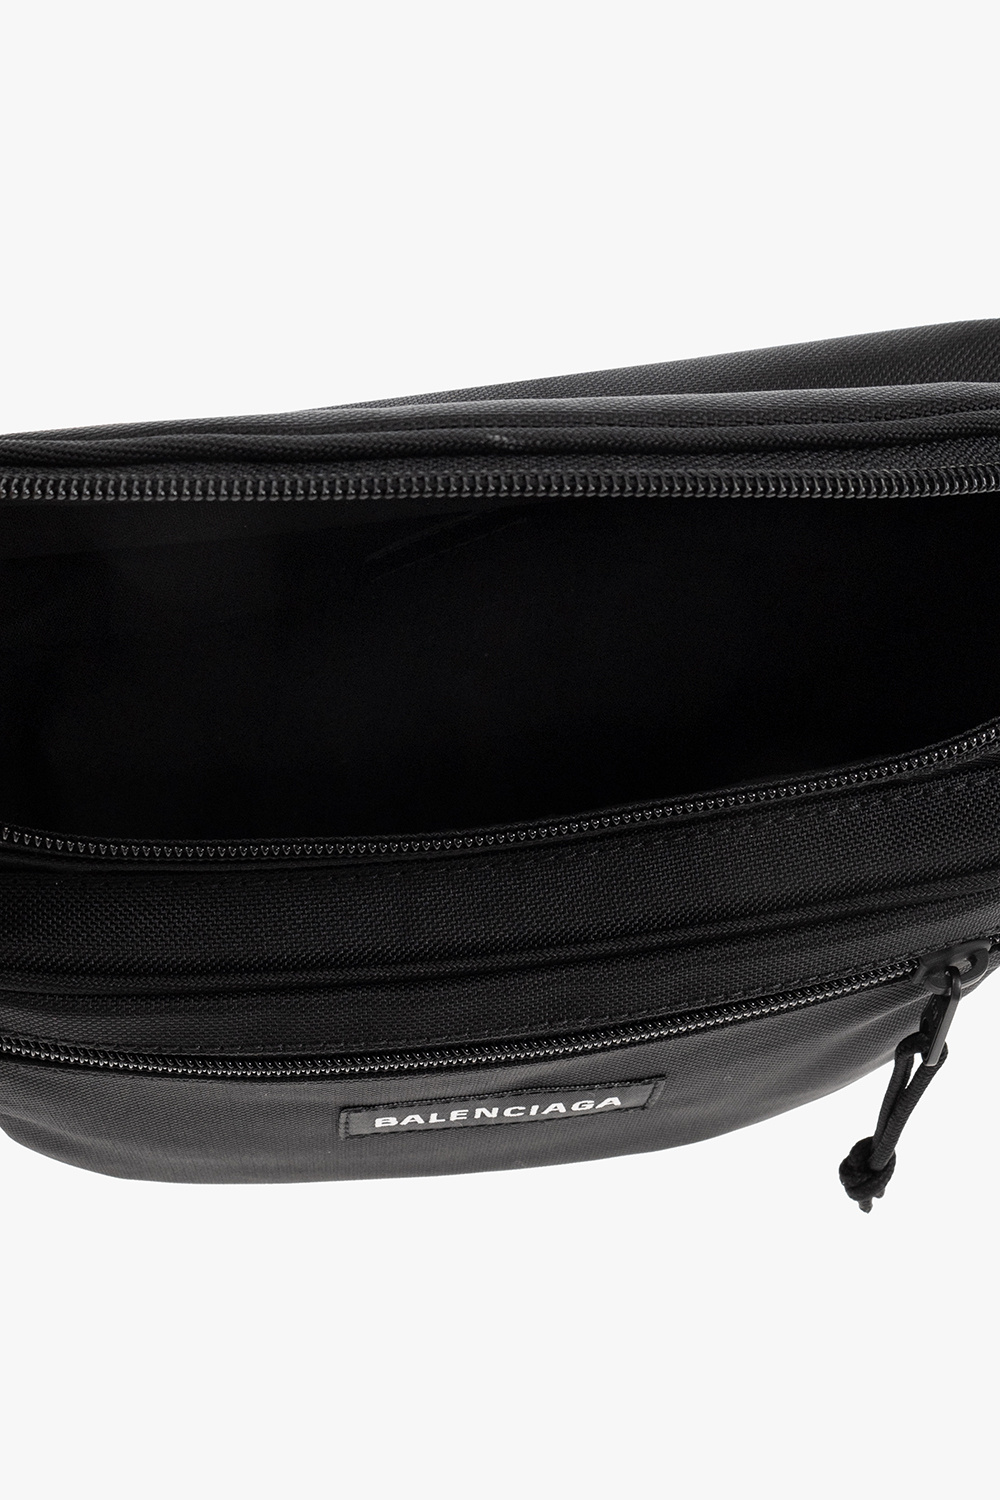 Balenciaga ‘Explorer’ belt Veneta bag